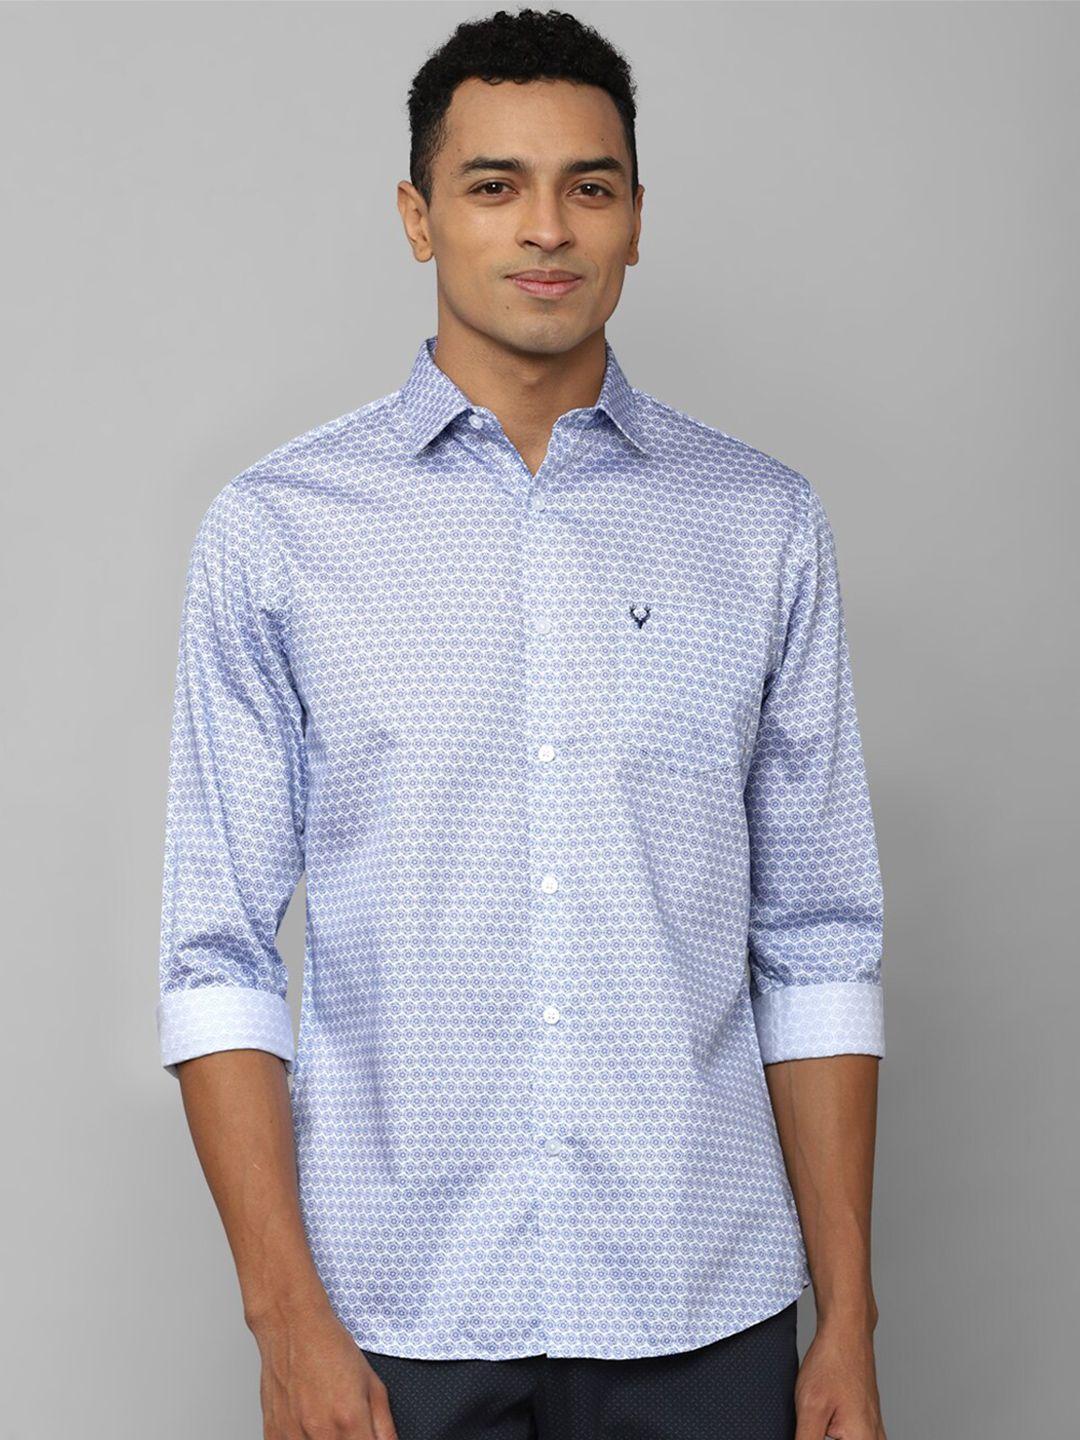 allen-solly-geometric-printed-spread-collar-pure-cotton-casual-shirt